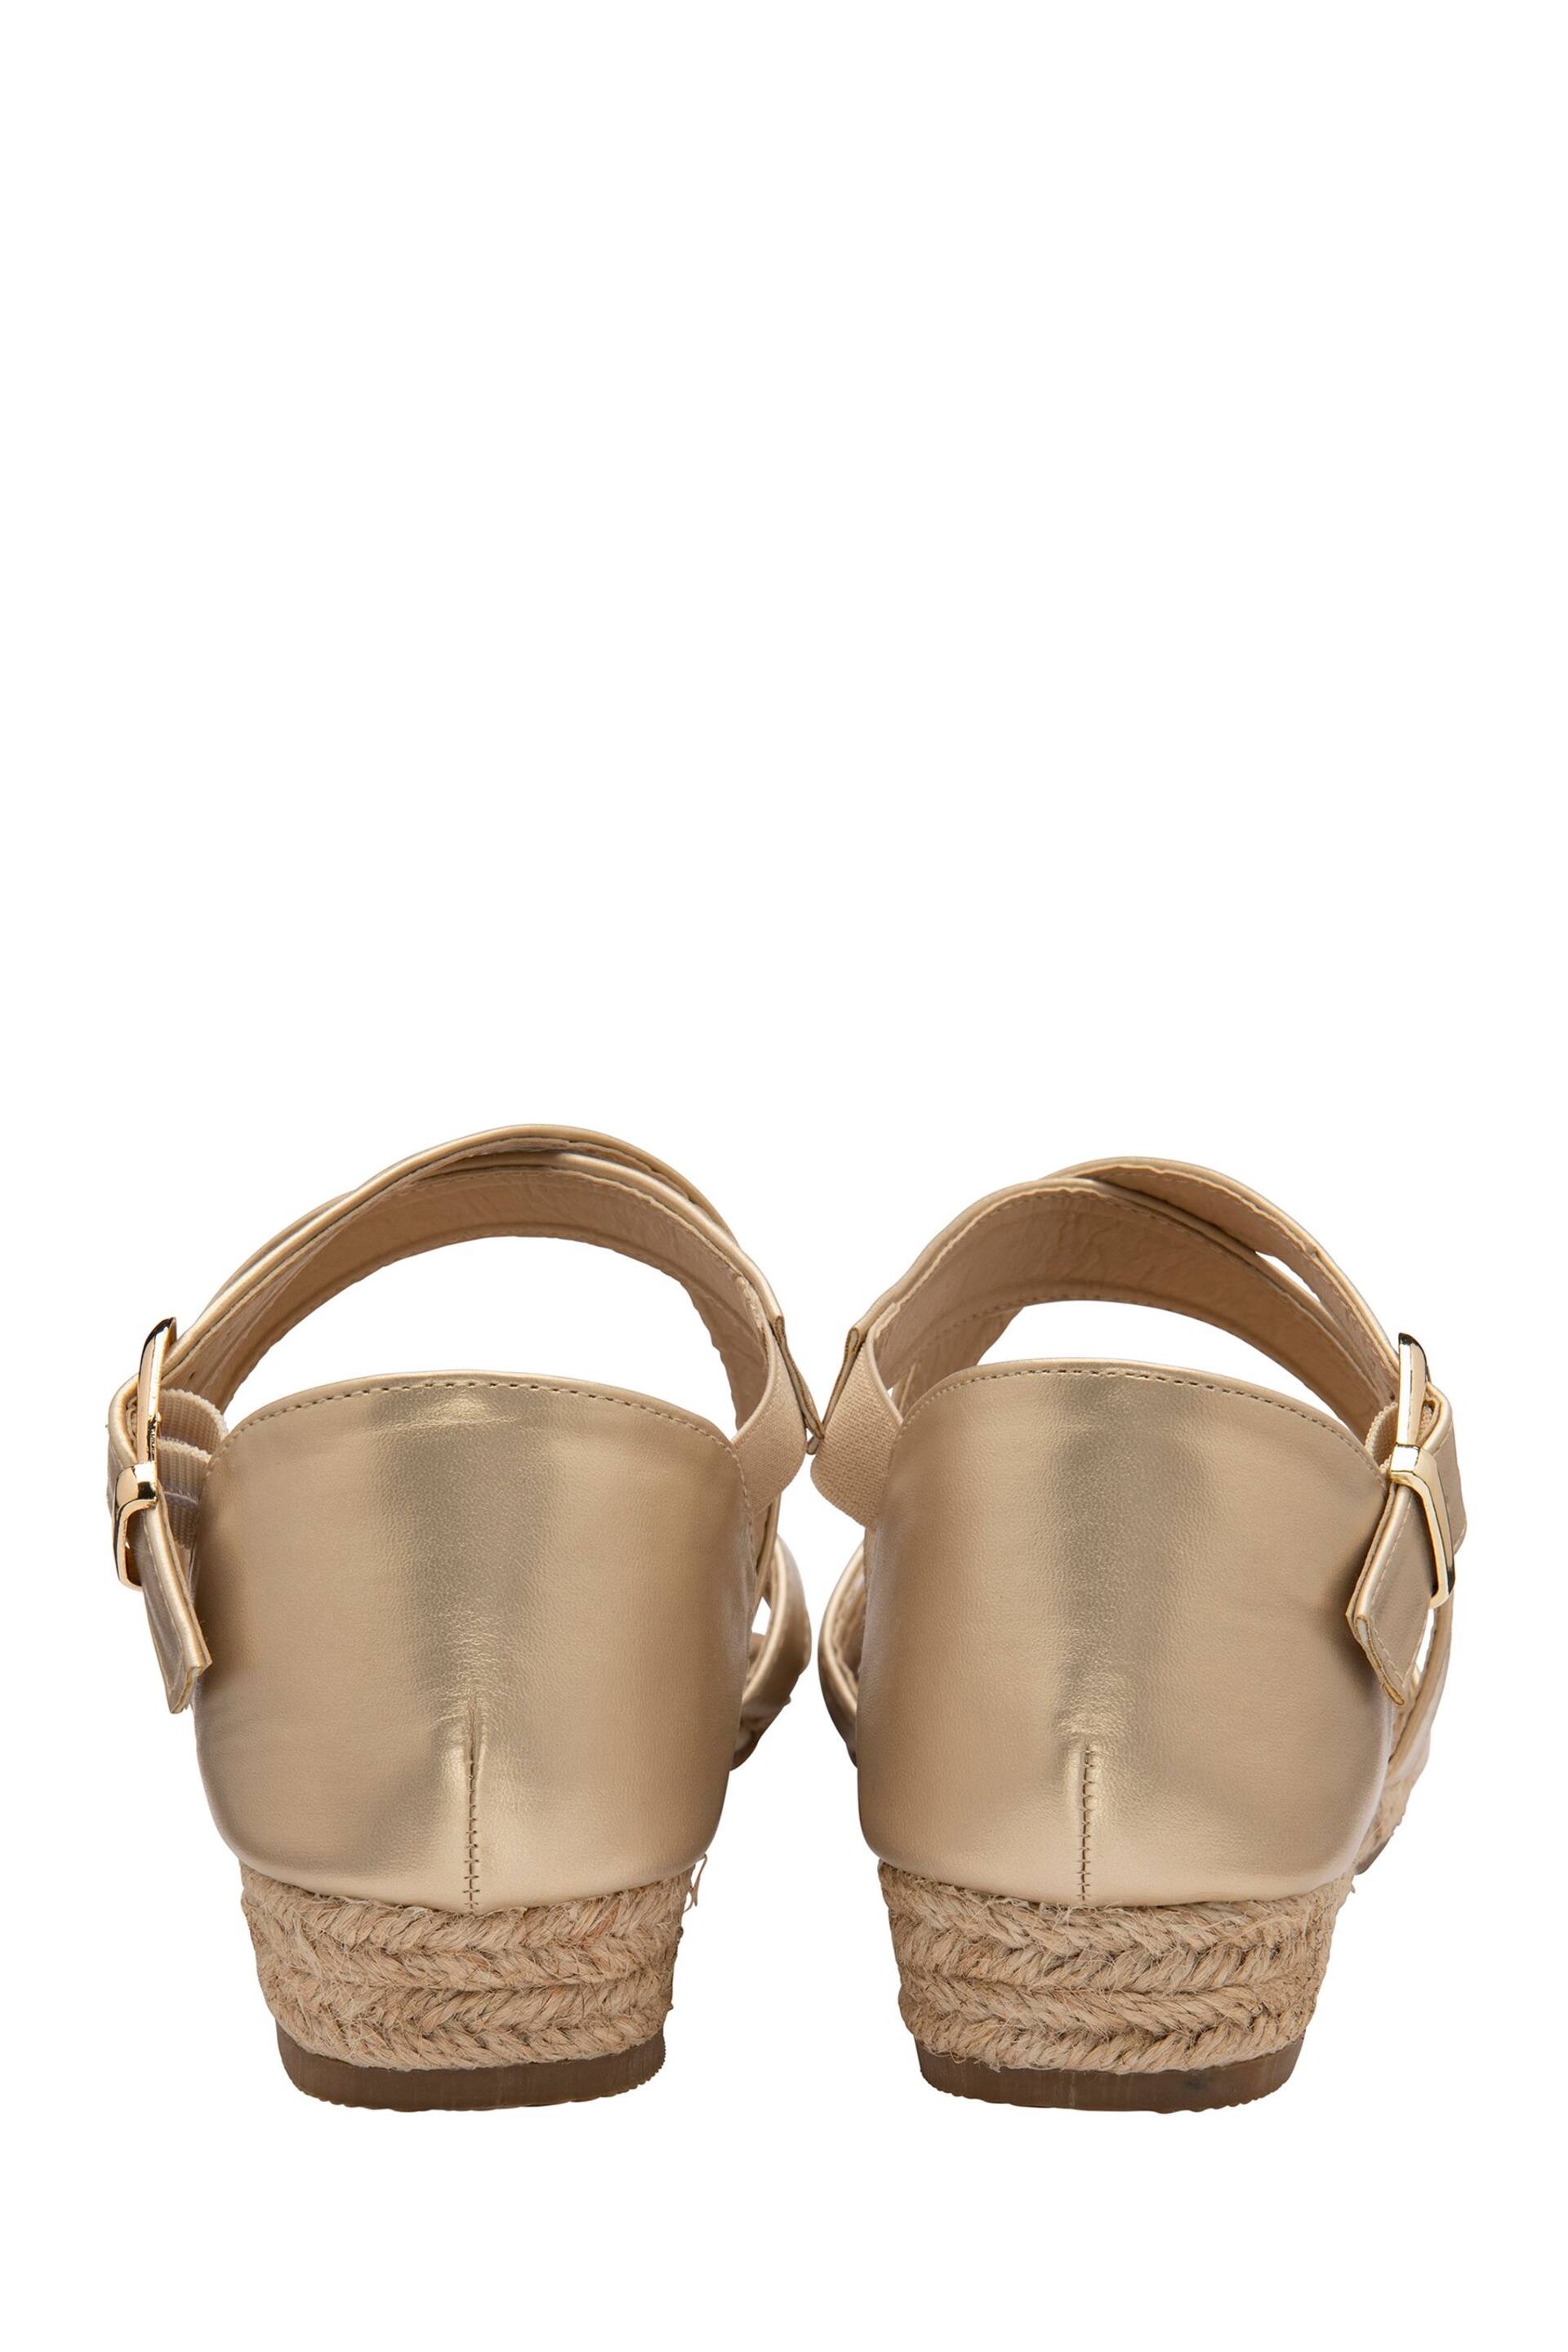 Dunlop Gold Wedges Open Toe Sandals - Image 3 of 4